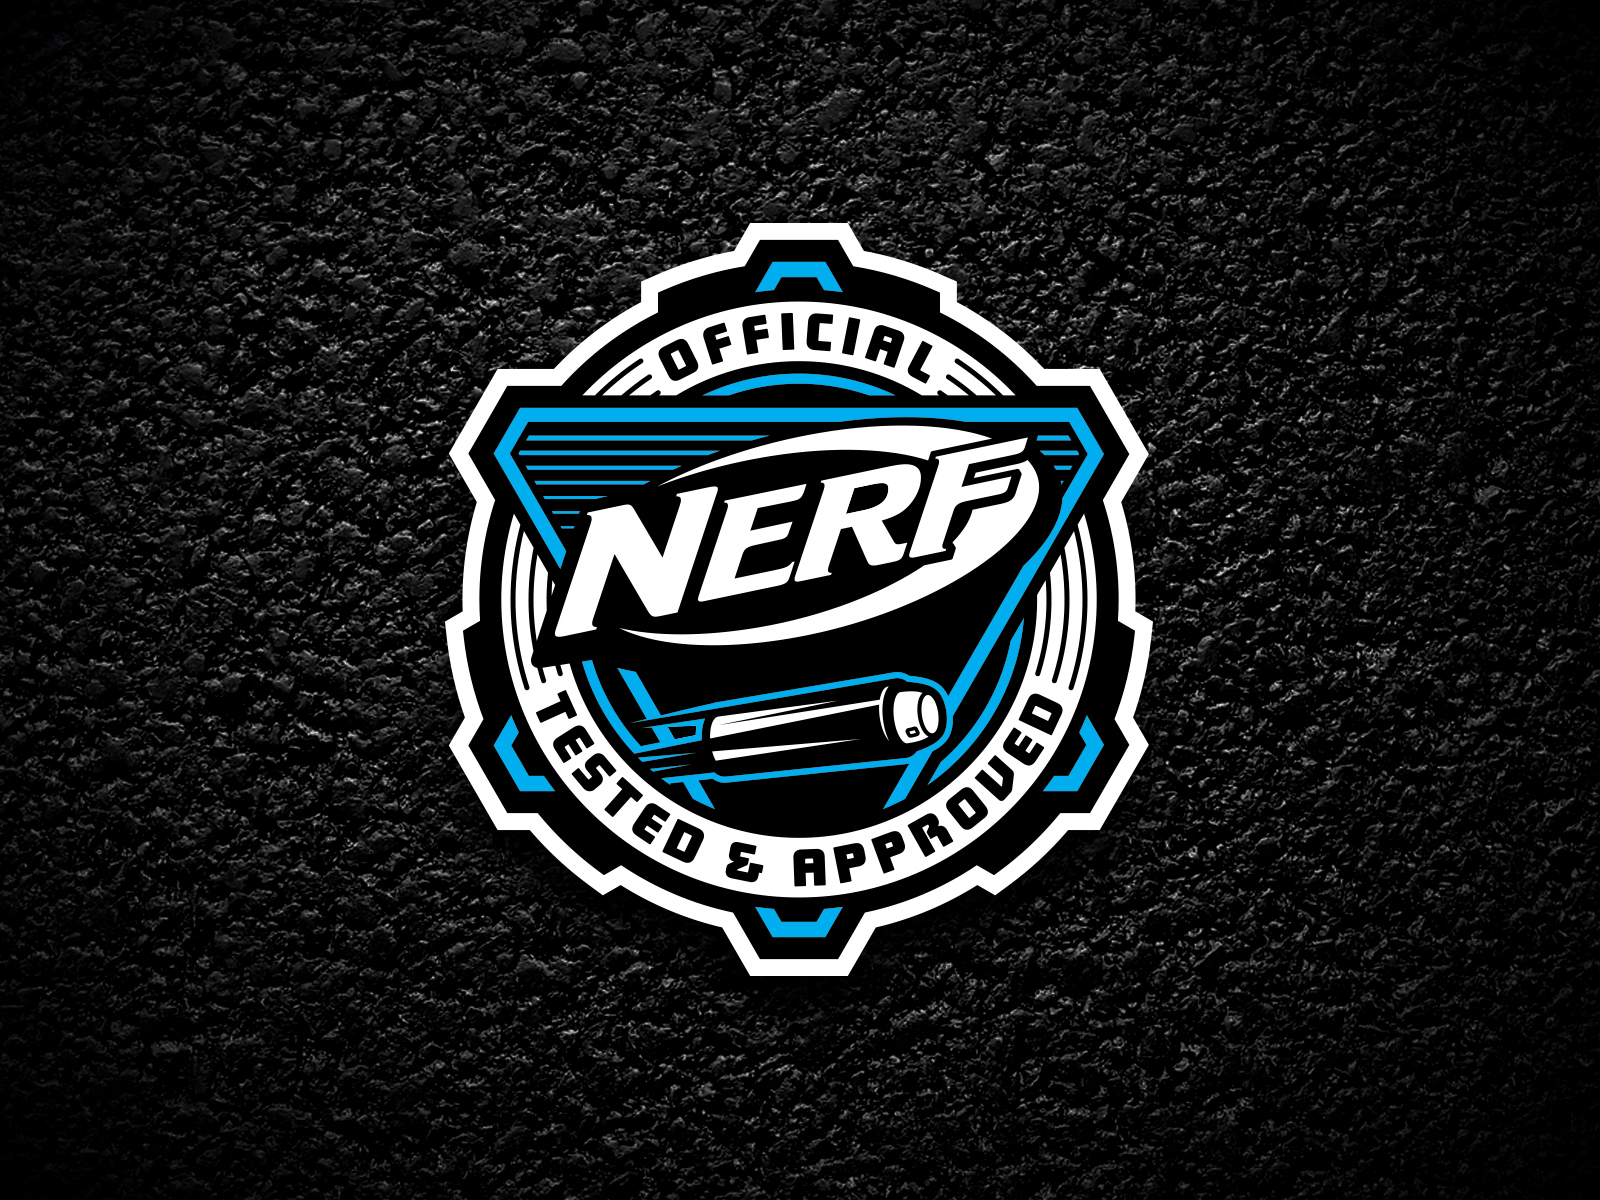 Boy's Nerf Classic Logo Performance Tee : Target